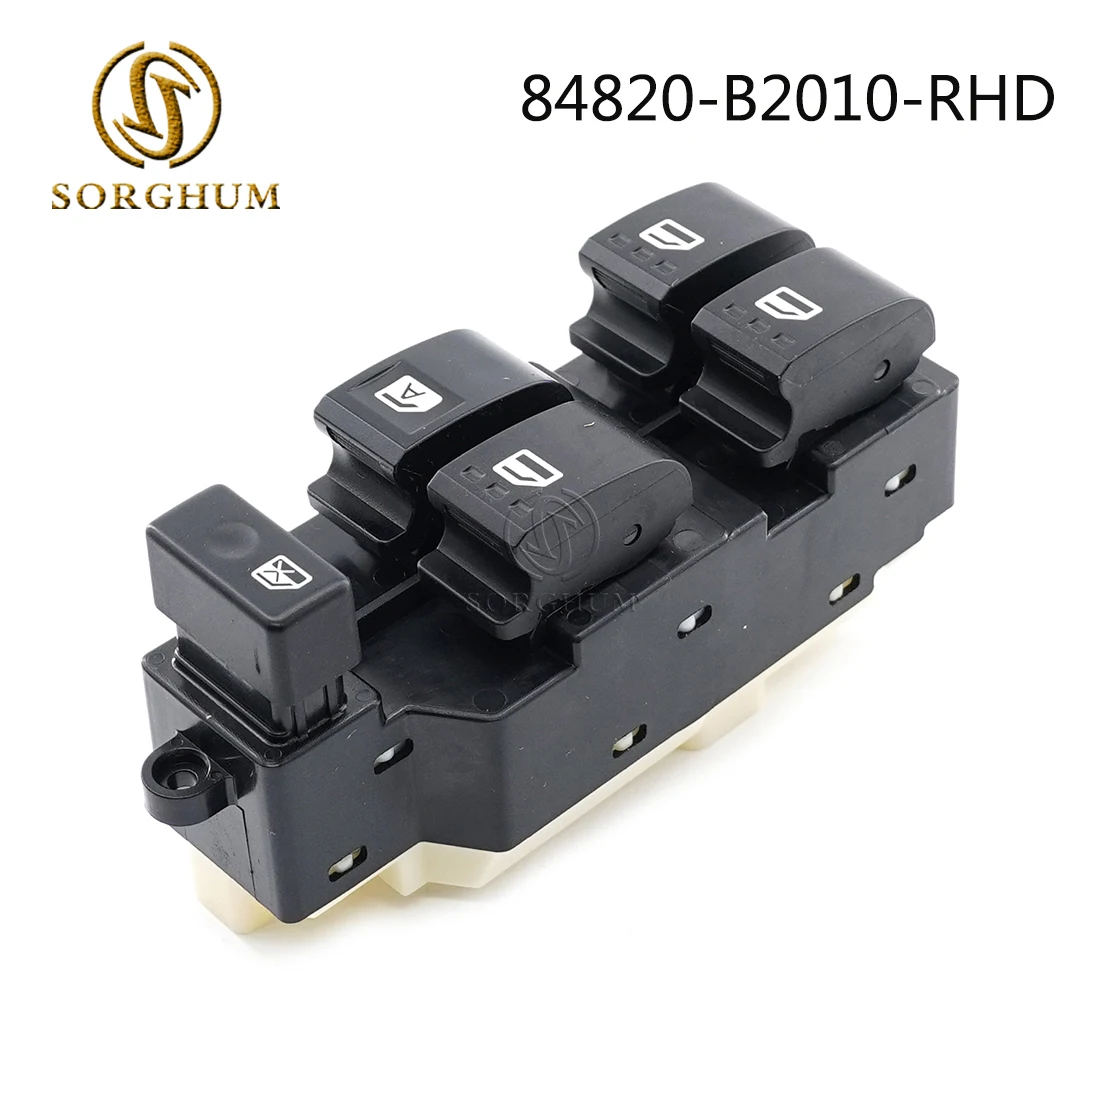 

Sorghum Right Hand Drive Master Power Window Lifter Switch Regulator For Daihatsu Sirion Terios J2 Toyota Avanza 84820-B2010